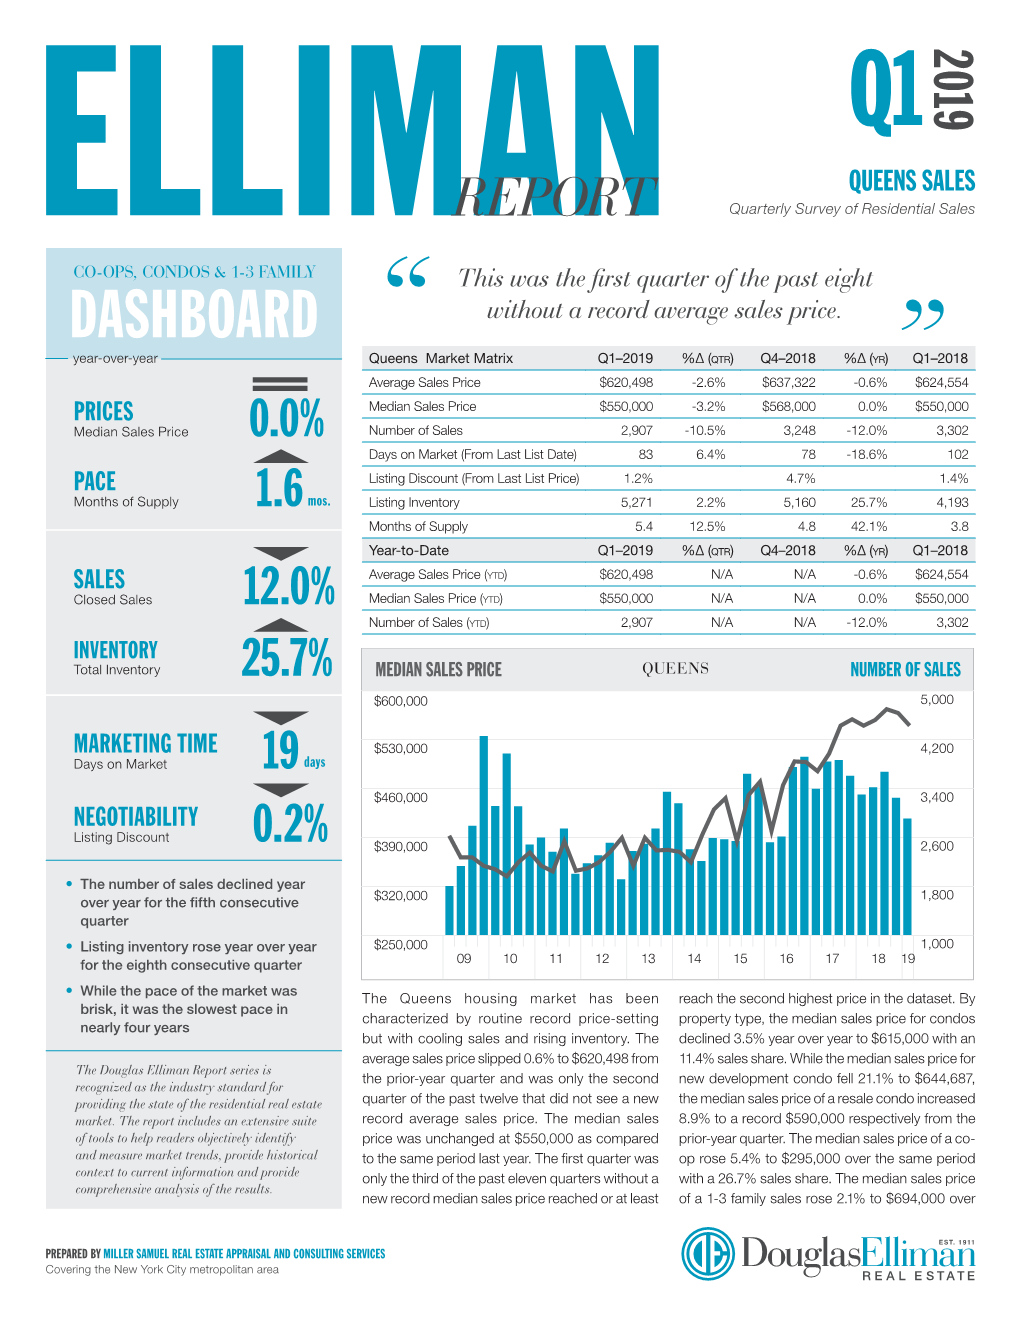 The Elliman Report: Q1-2019 Queens Sales Prepared by Miller Samuel